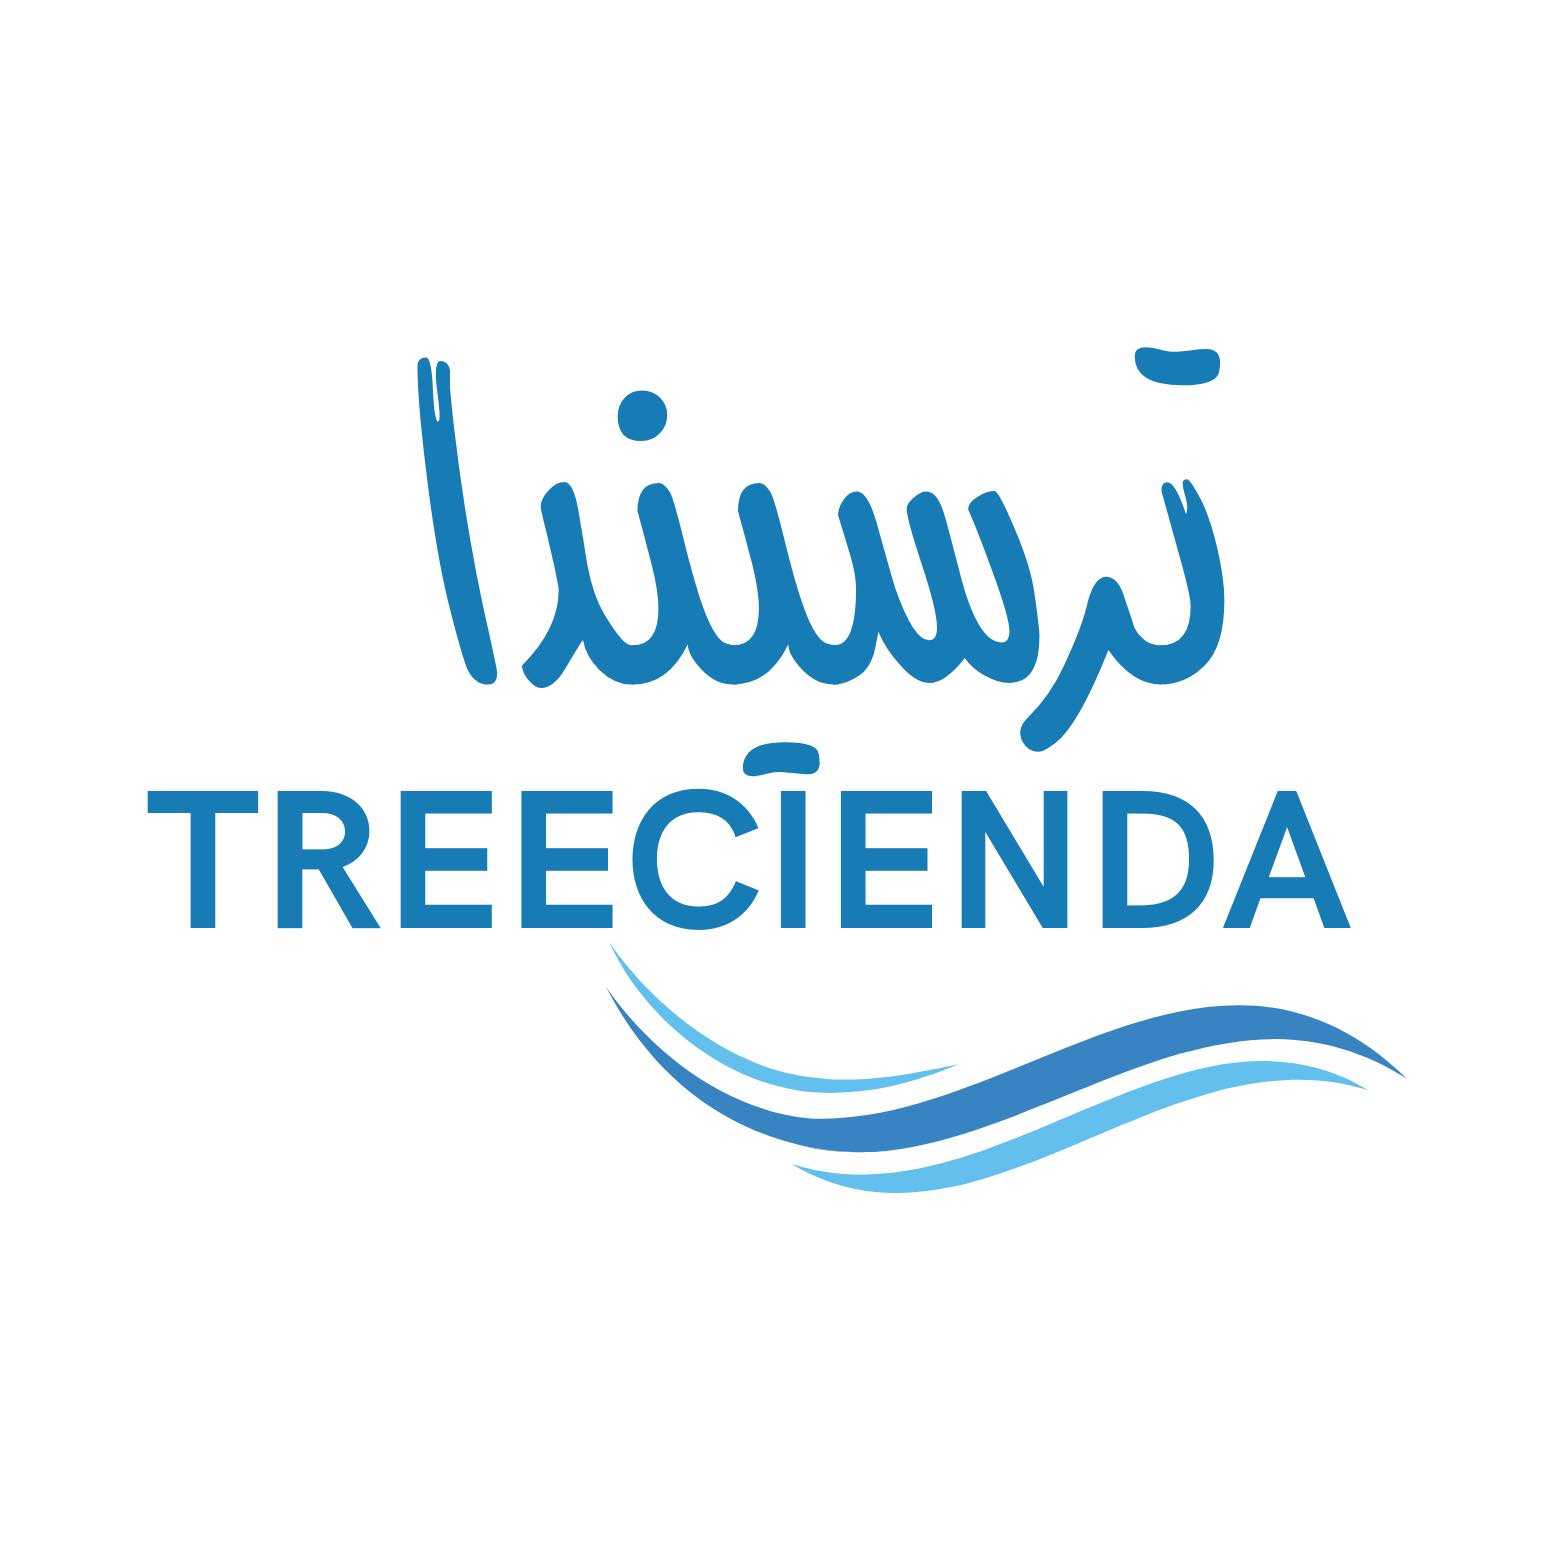 Treecienda - ترسيندا